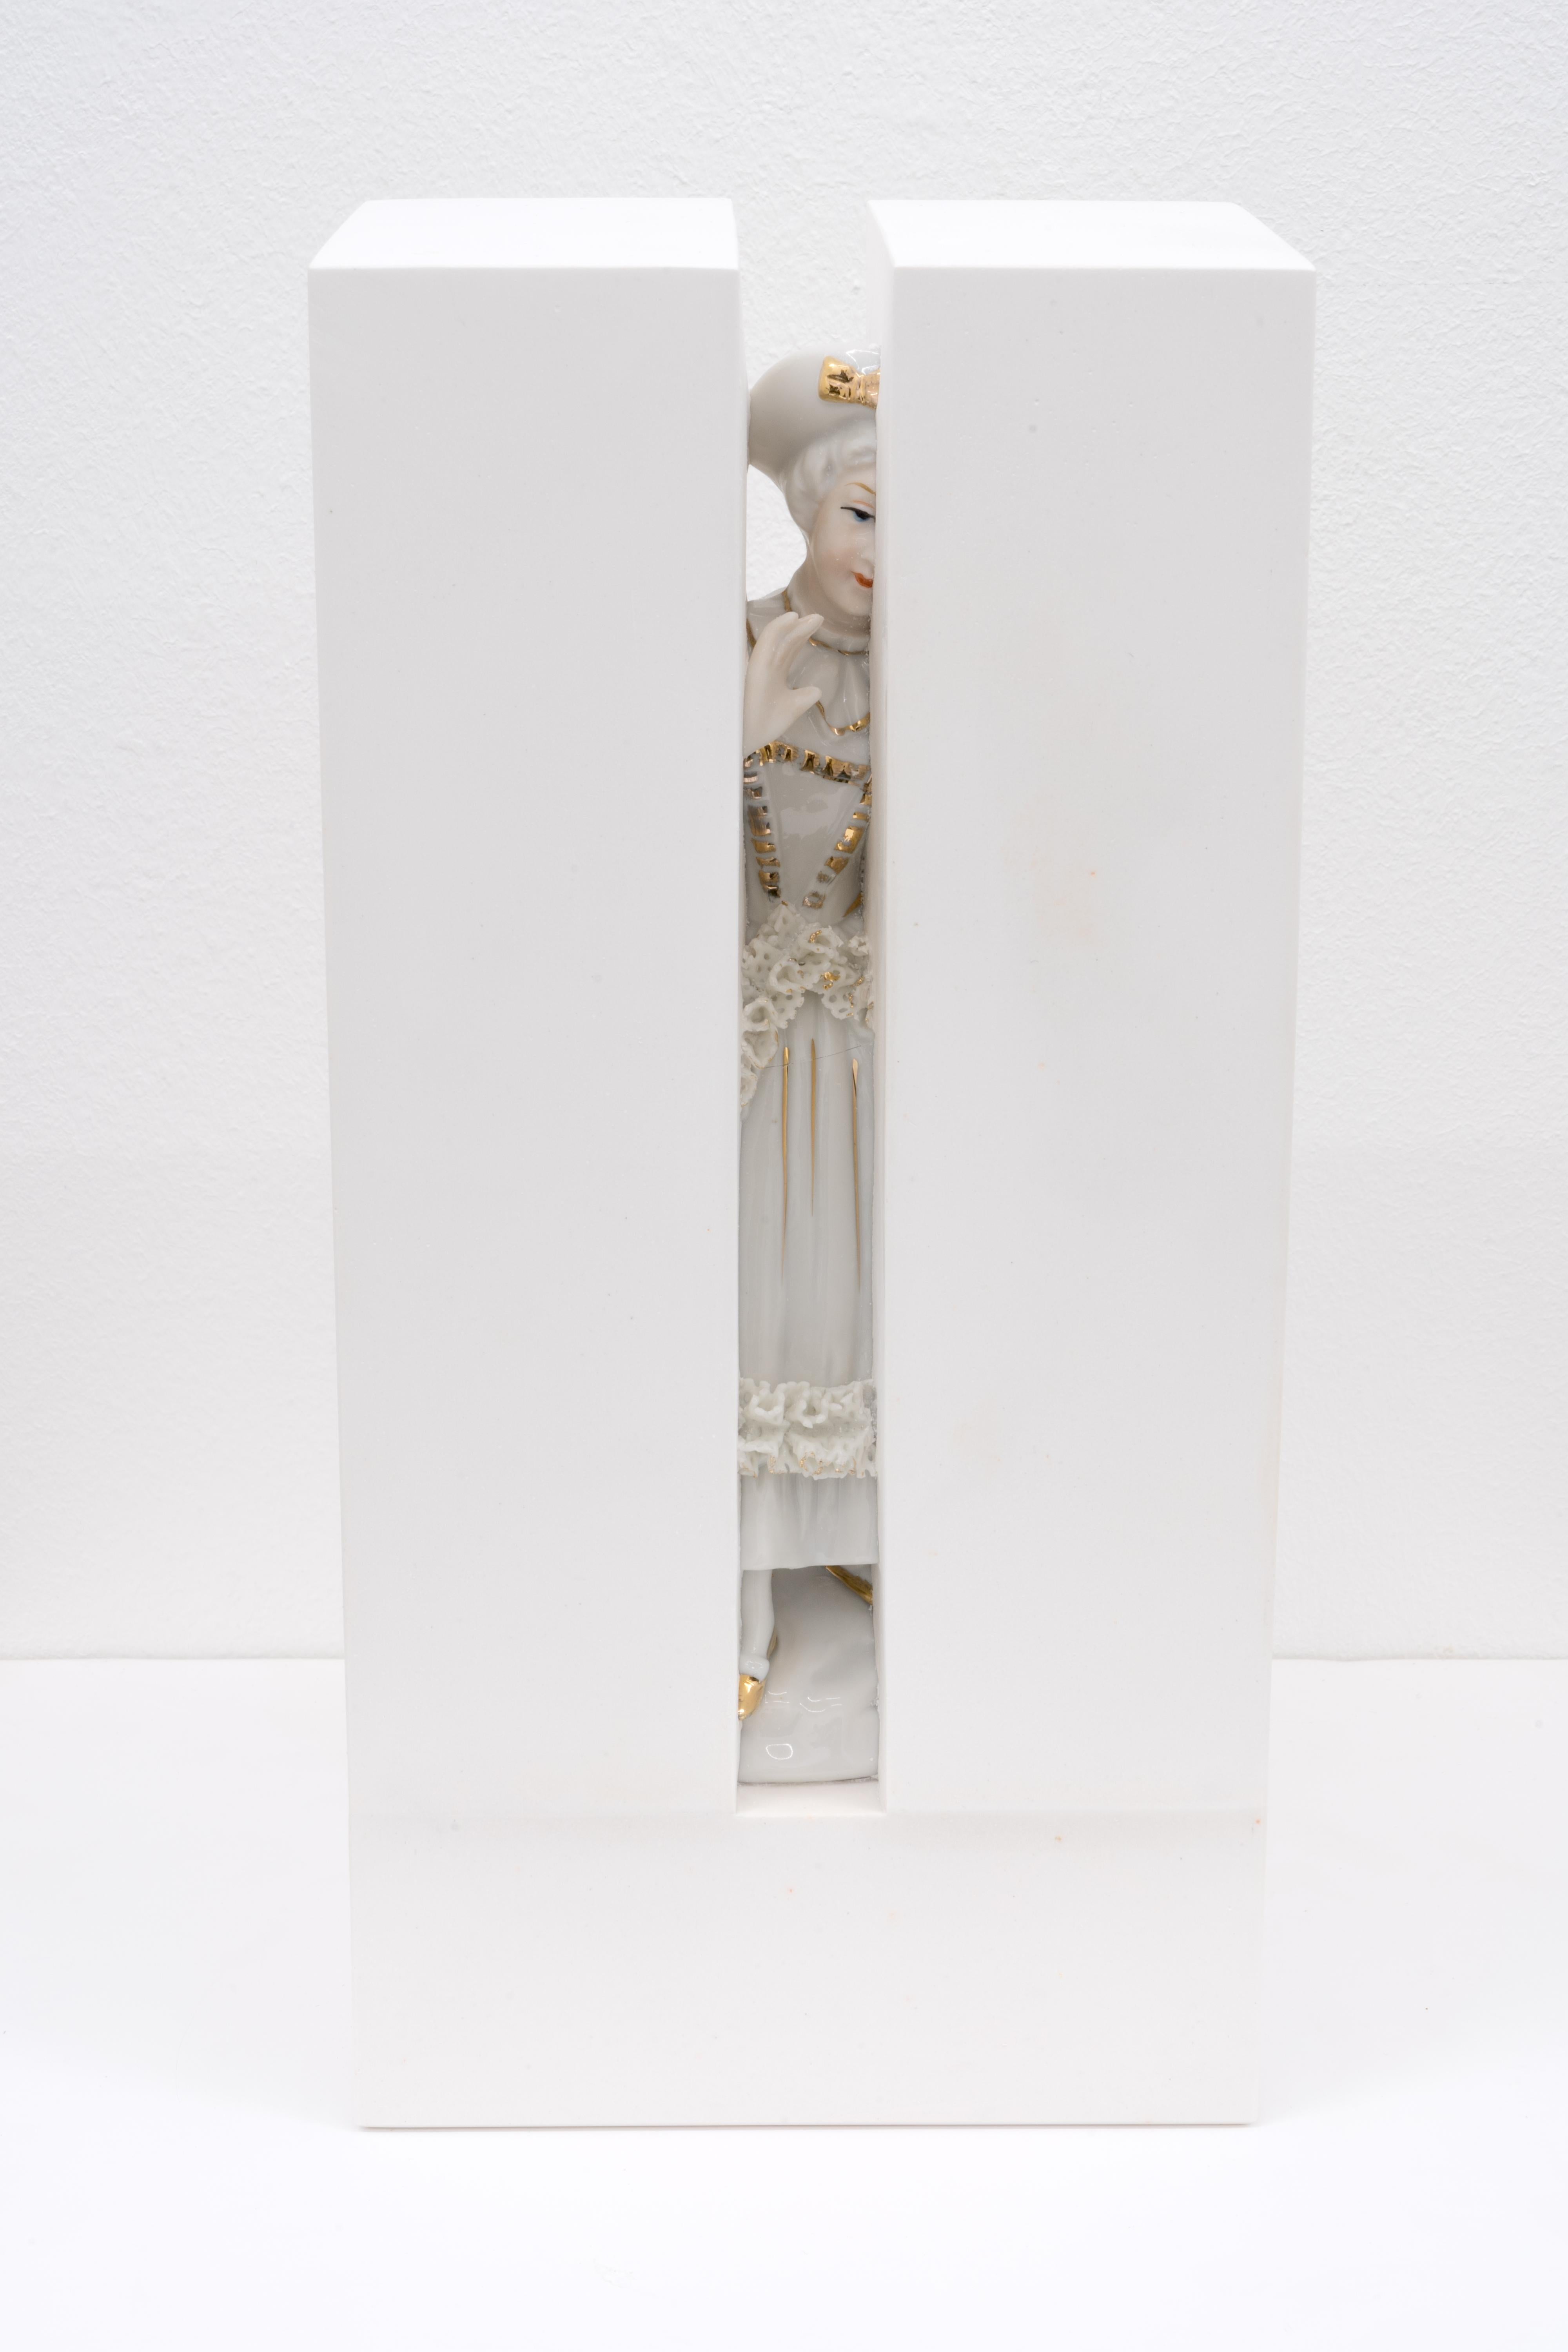 Broken flower No 6 - Sculpture by Dana Widawski